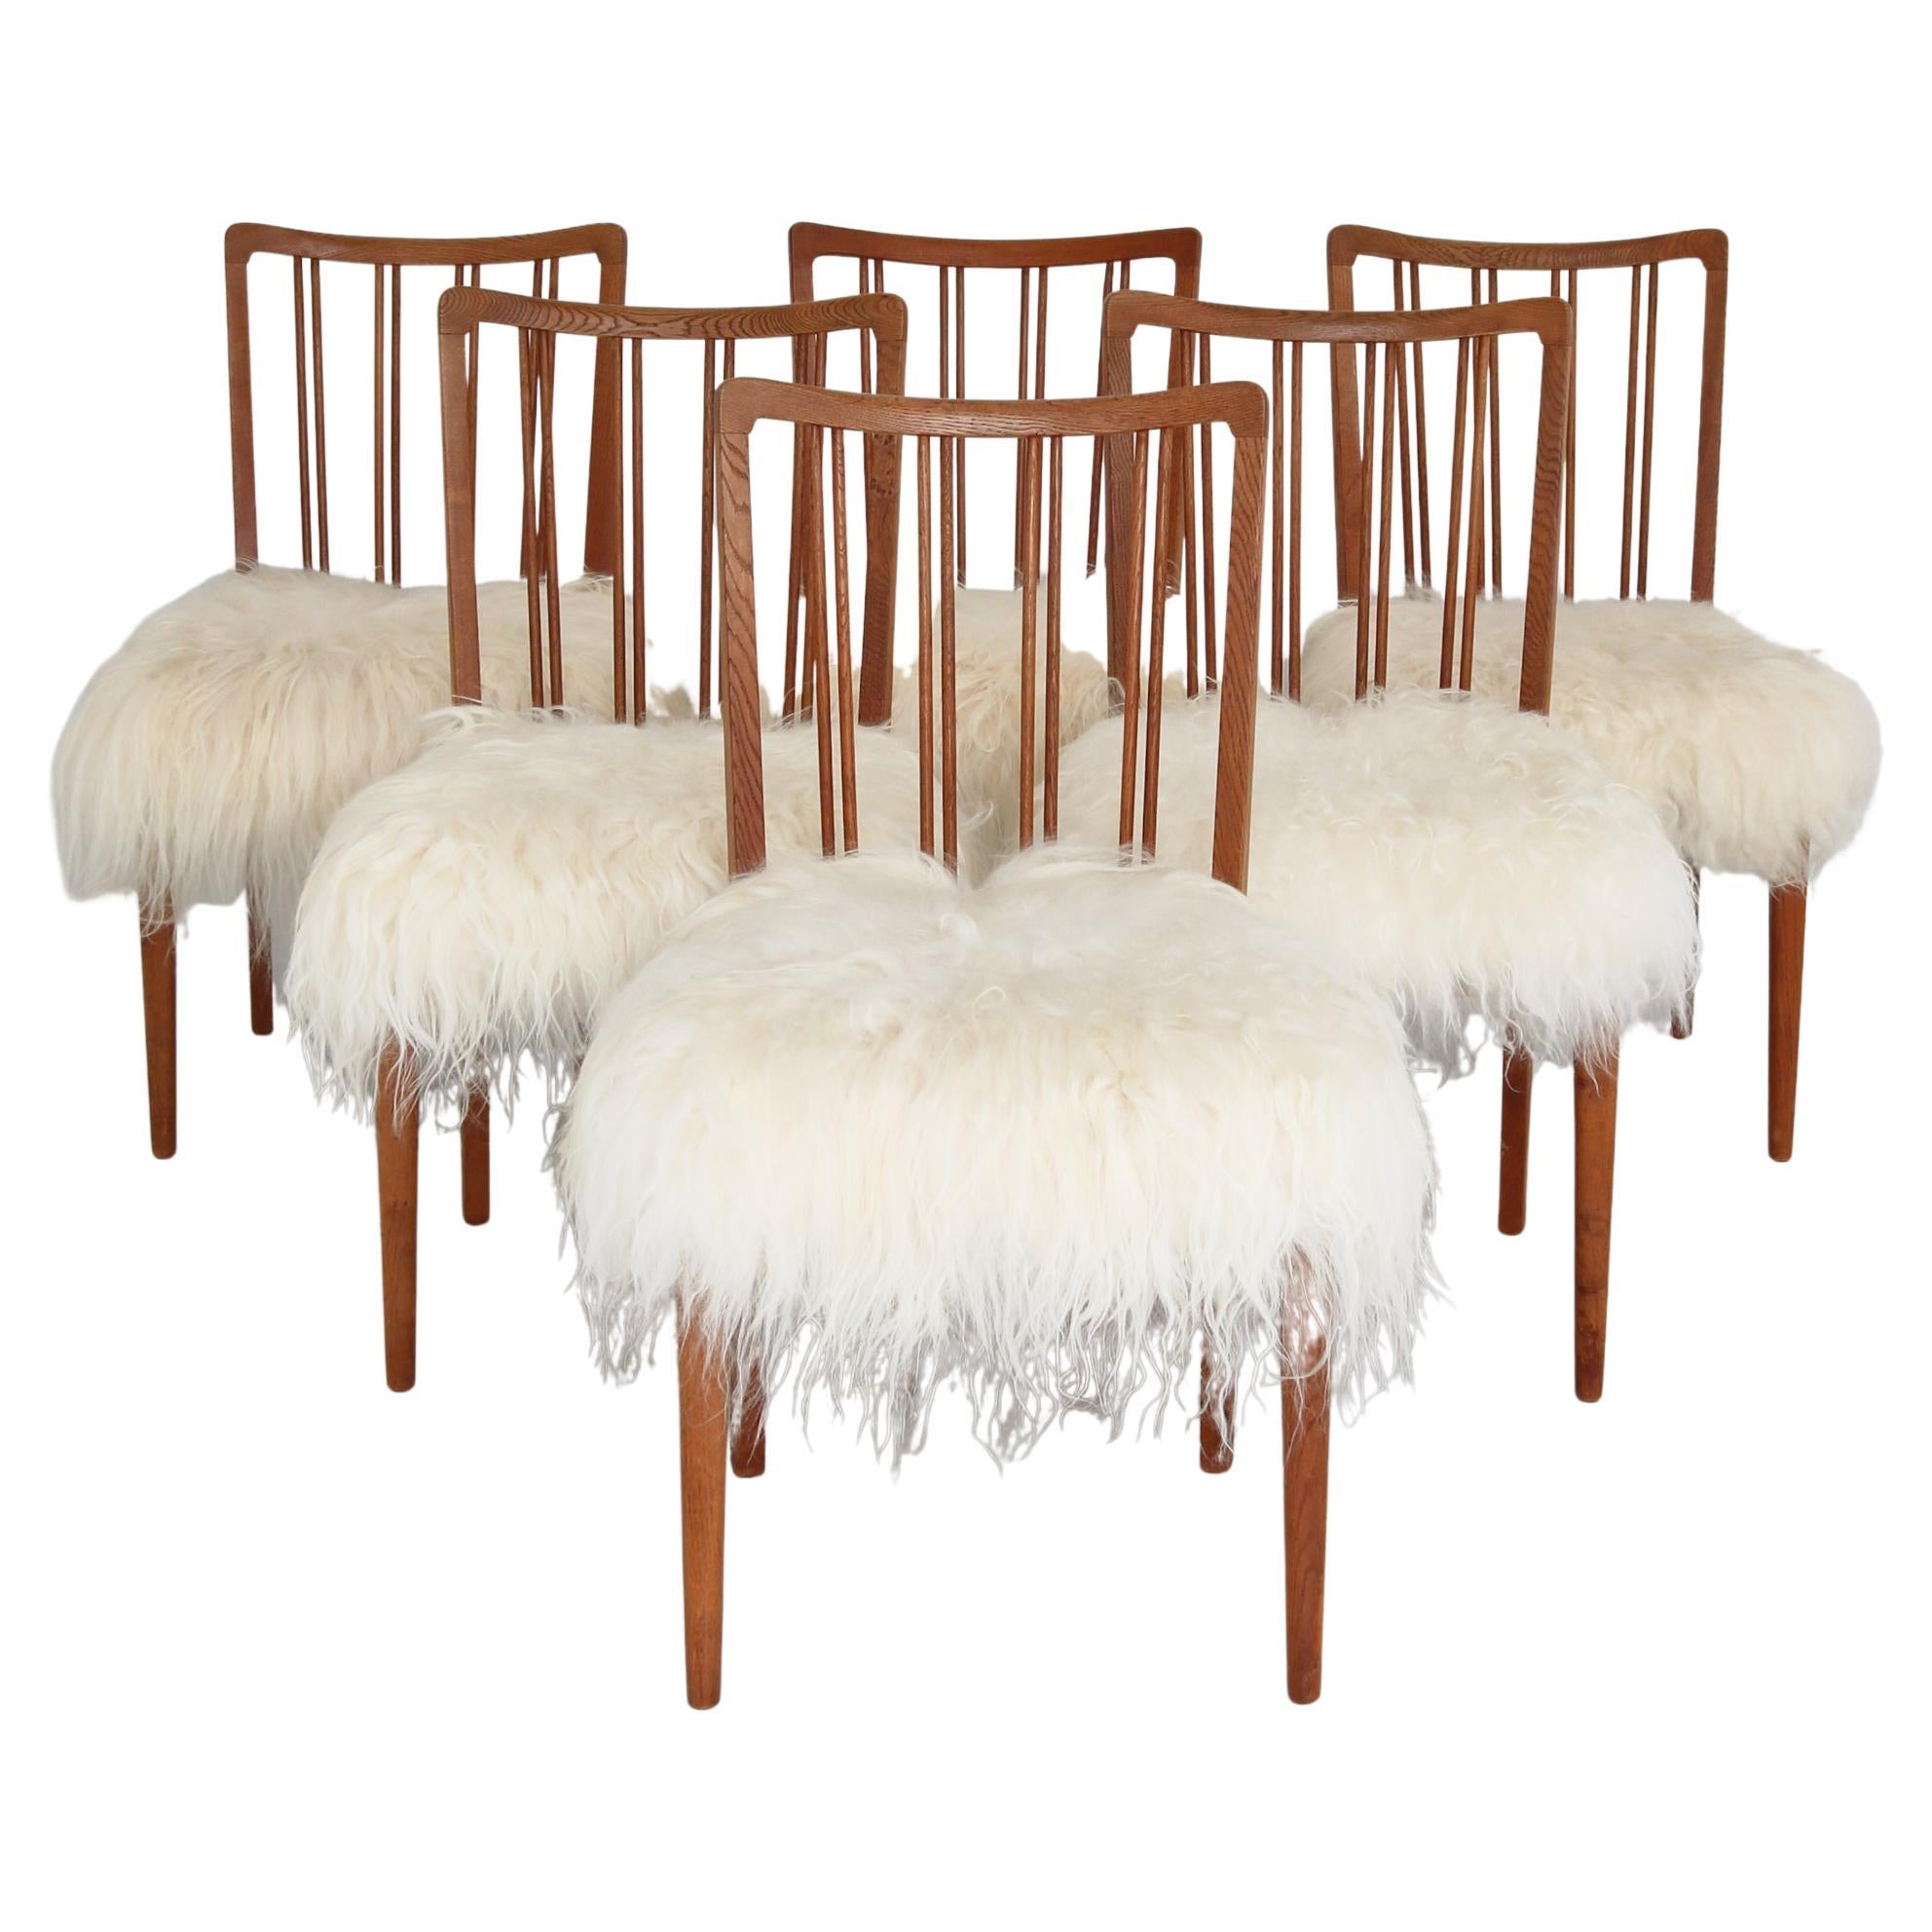 Set of 6 Spindle Back Chairs "Model 101" in Sheepskin & Oak, Denmark, 1950s For Sale